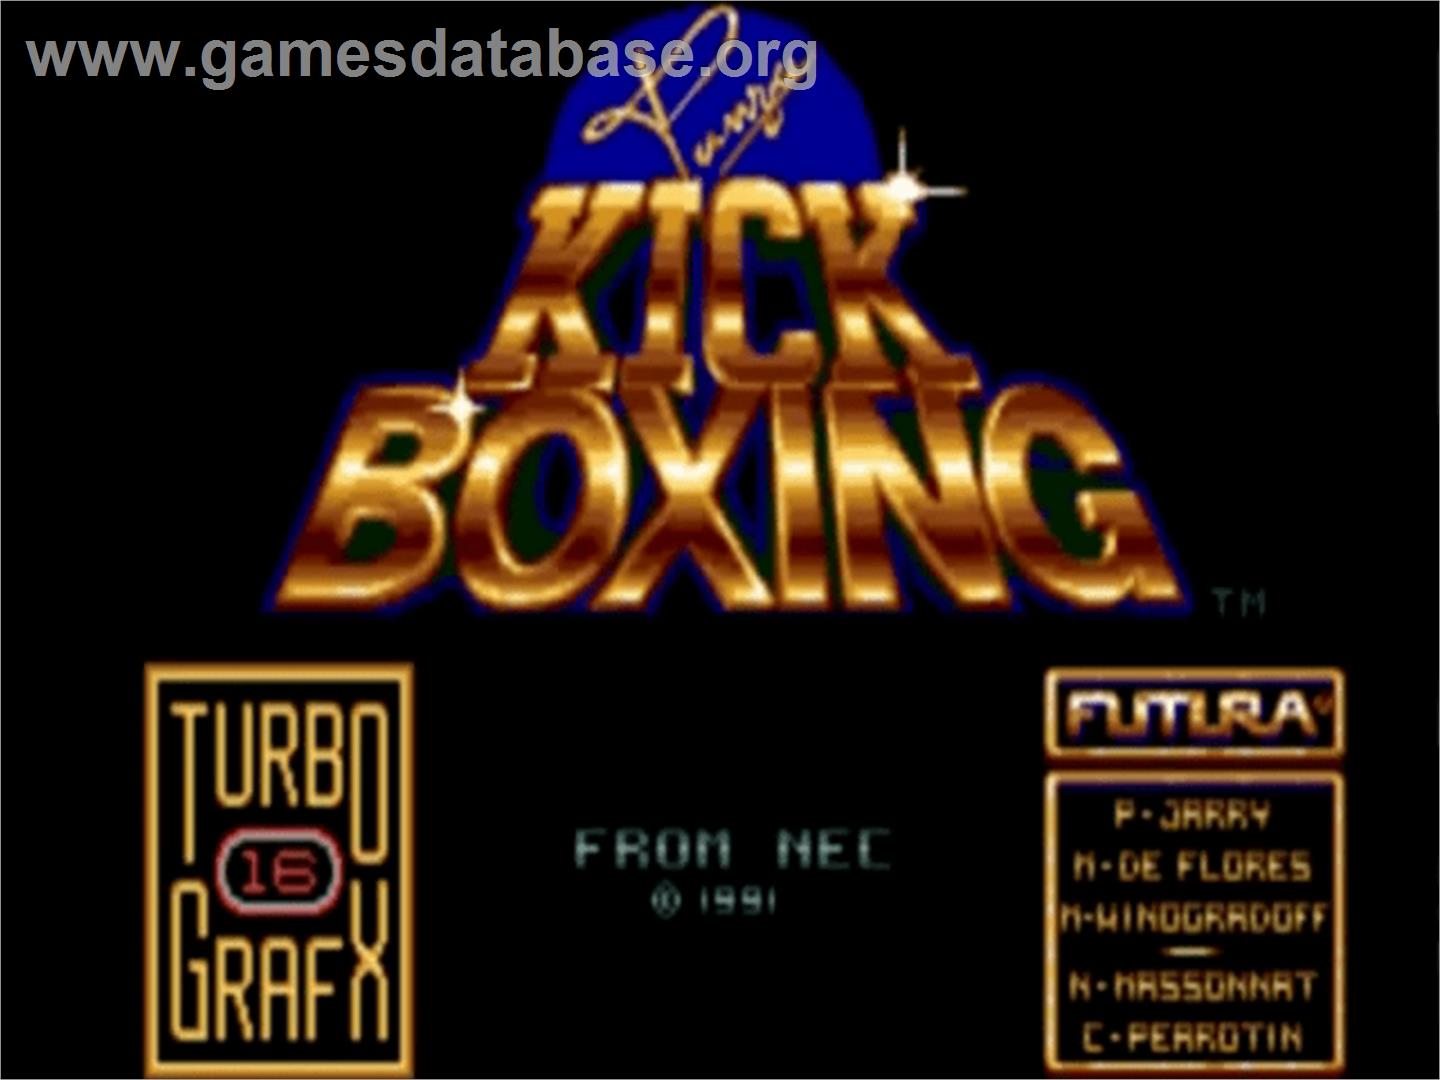 Panza Kick Boxing - NEC TurboGrafx-16 - Artwork - Title Screen